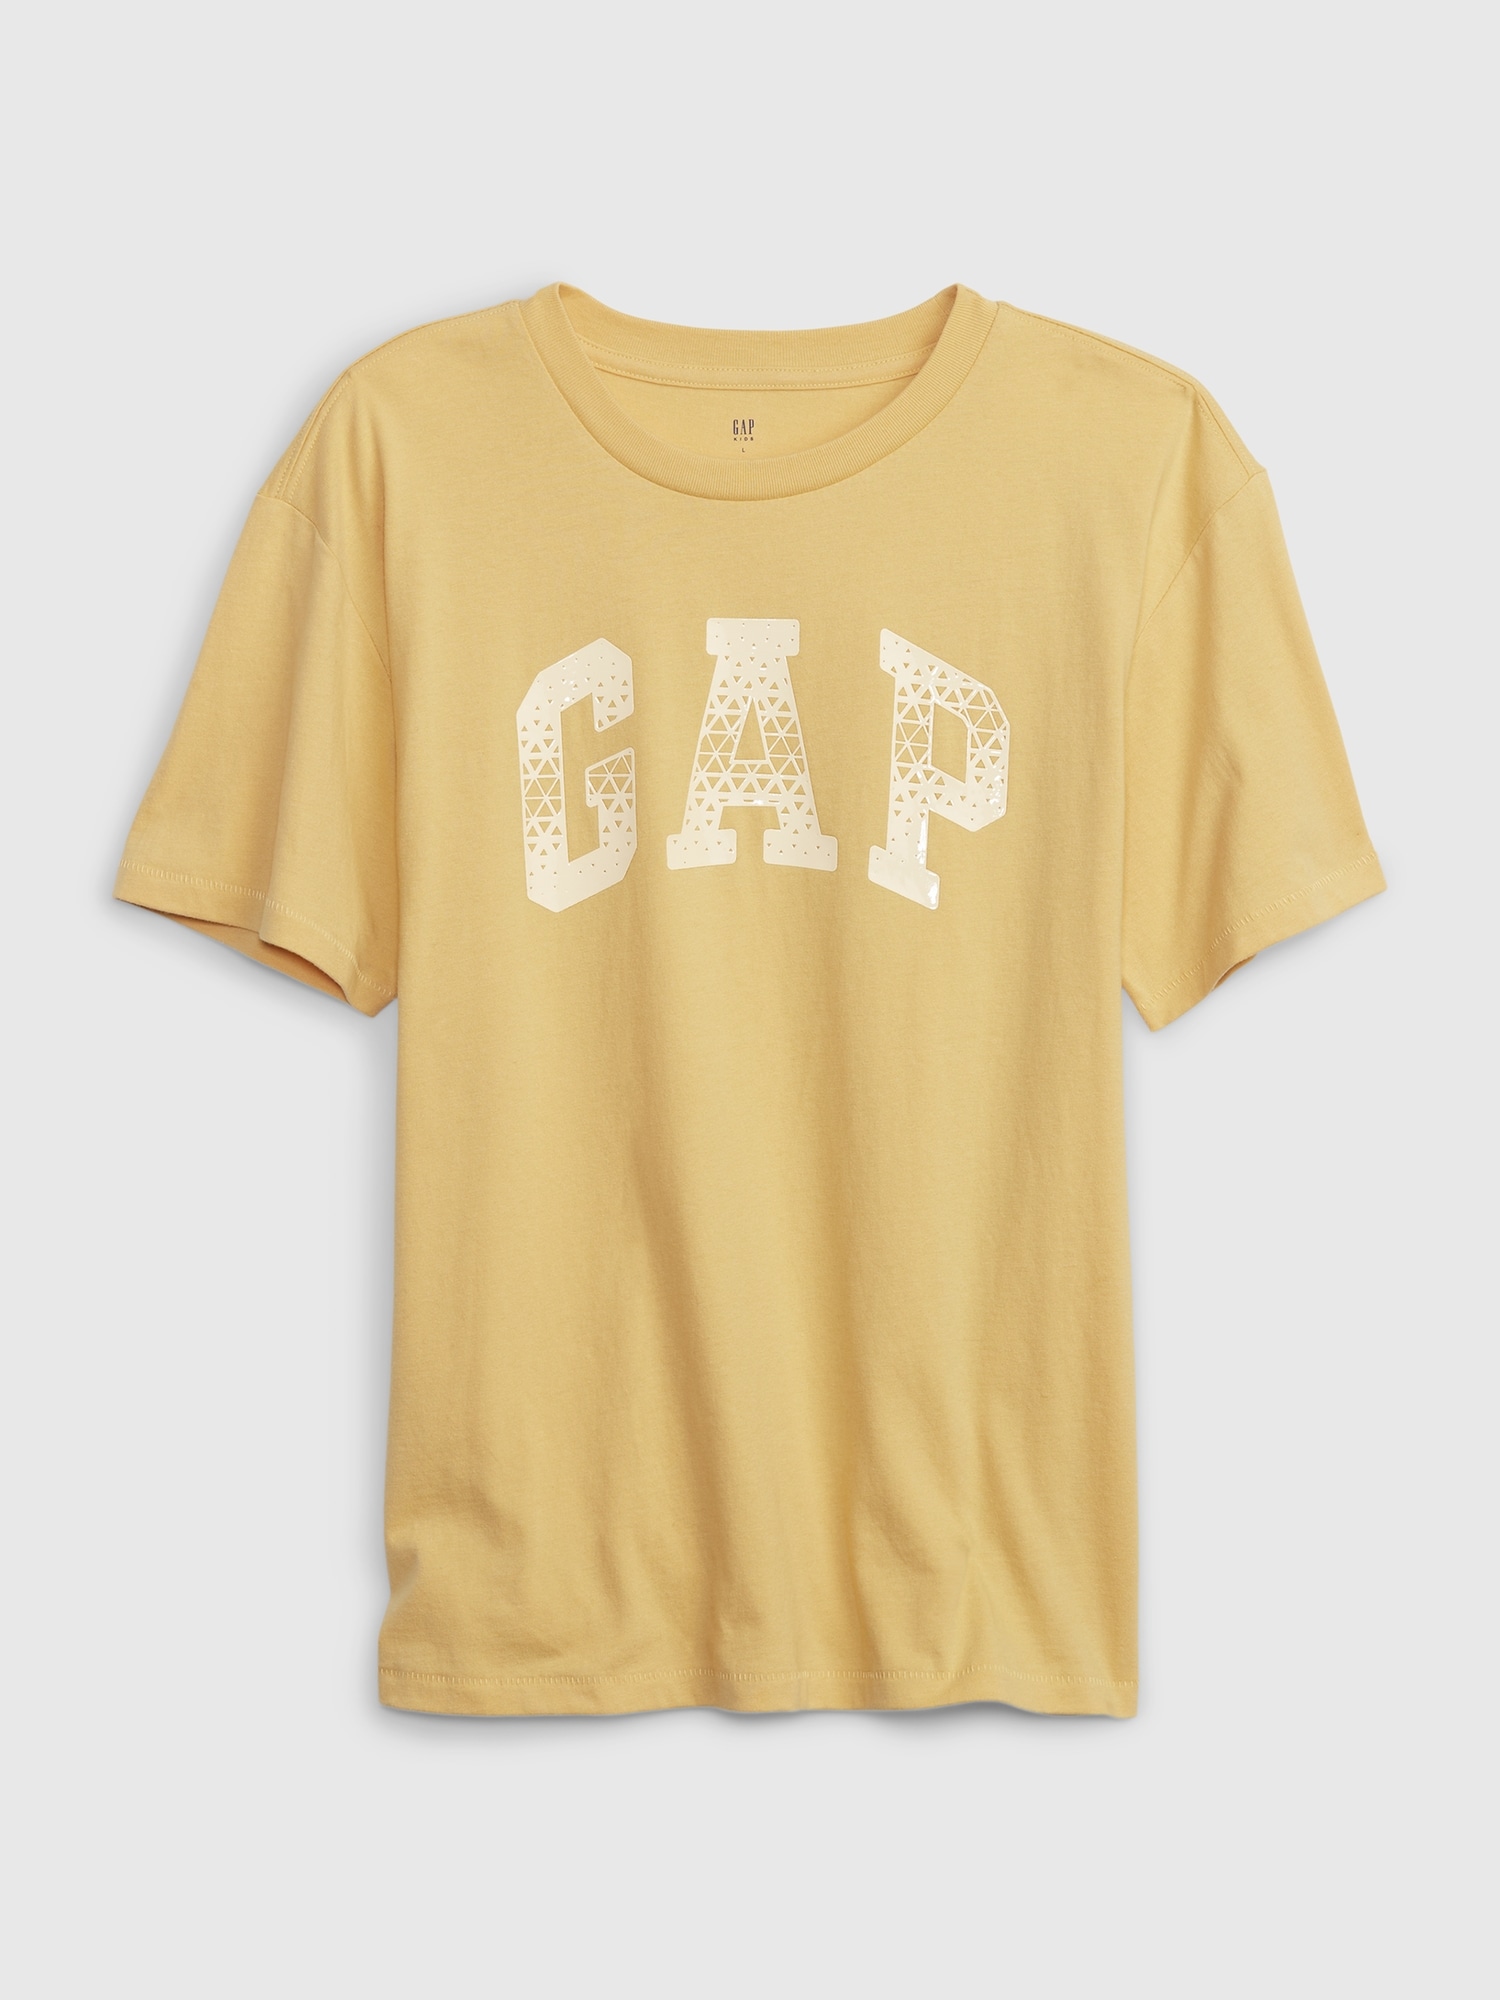 Gapfitキッズ グラフィックtシャツ